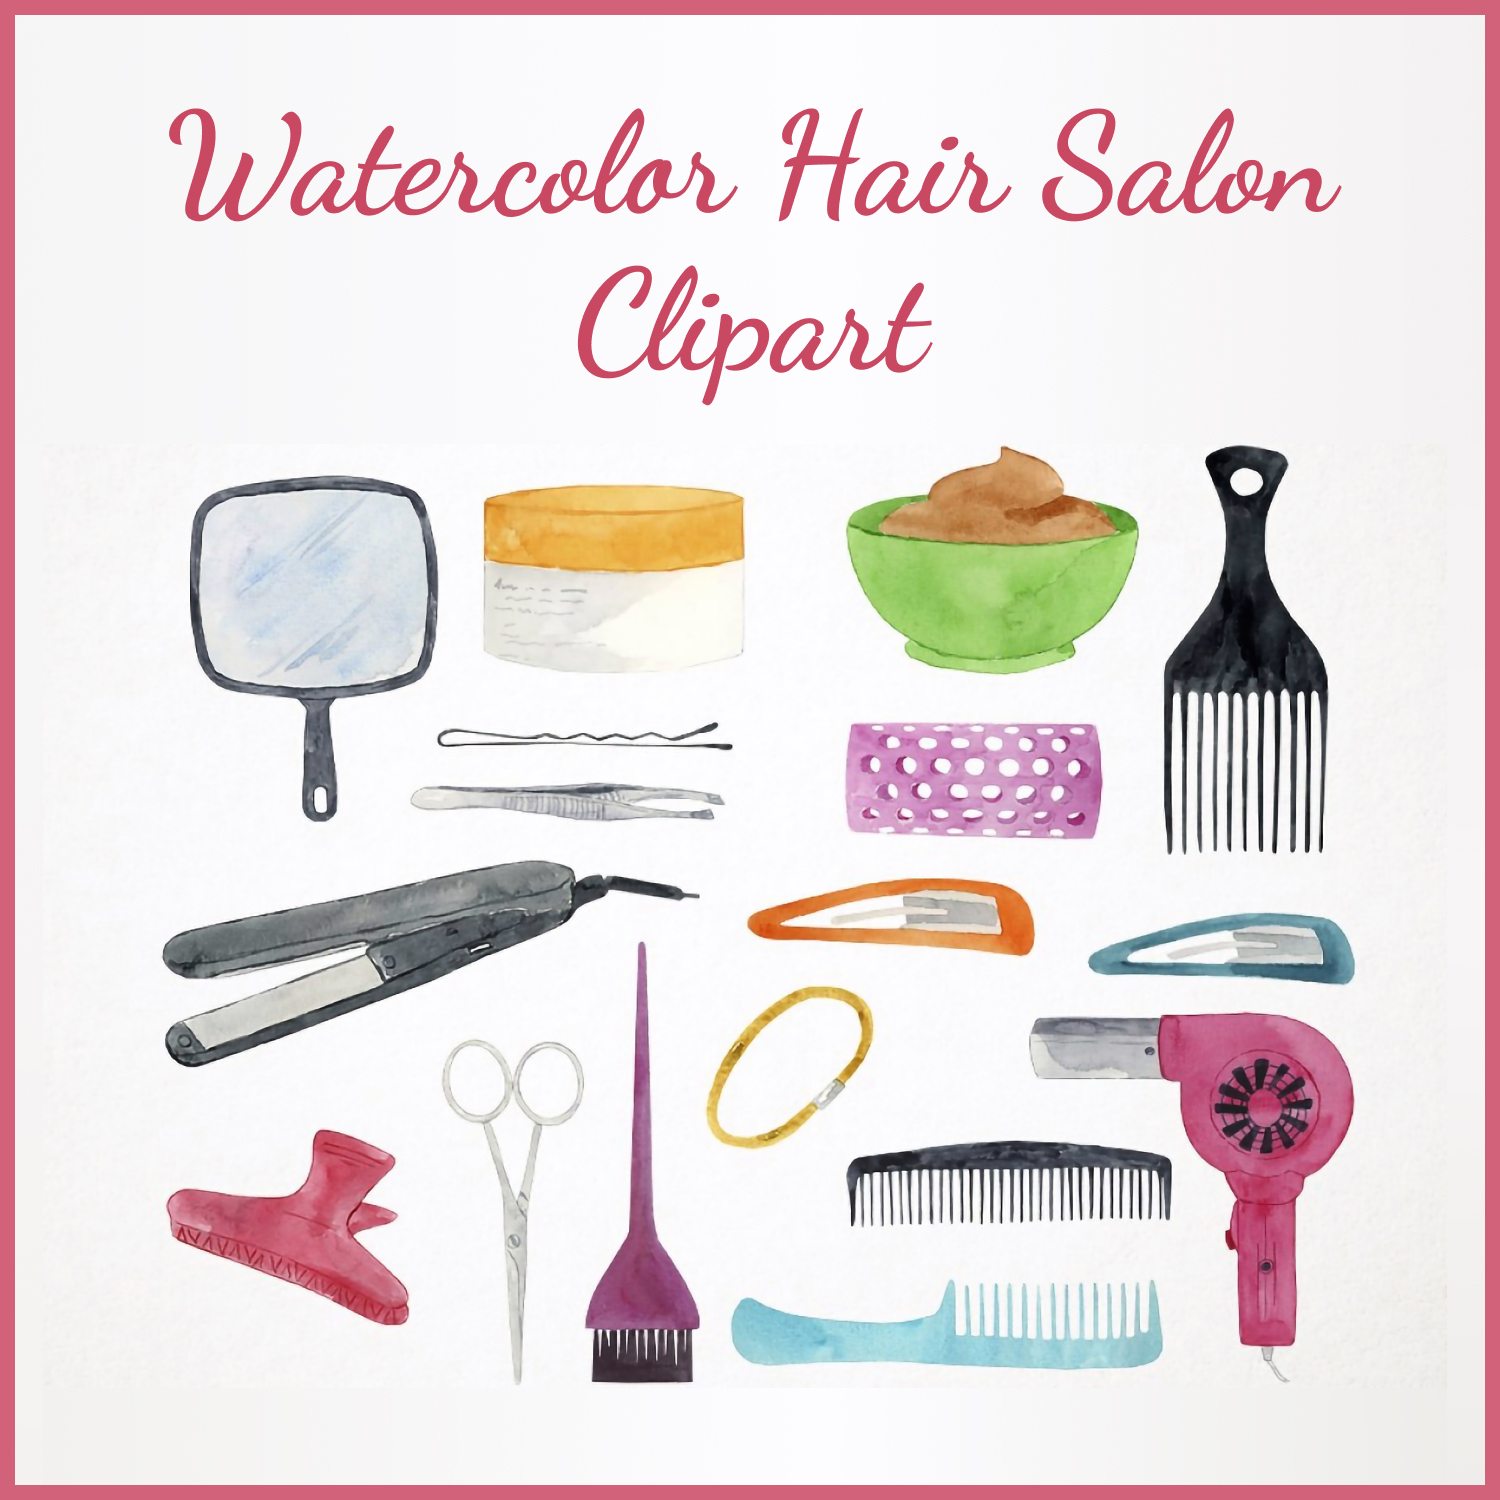 Watercolor hair salon clipart preview.